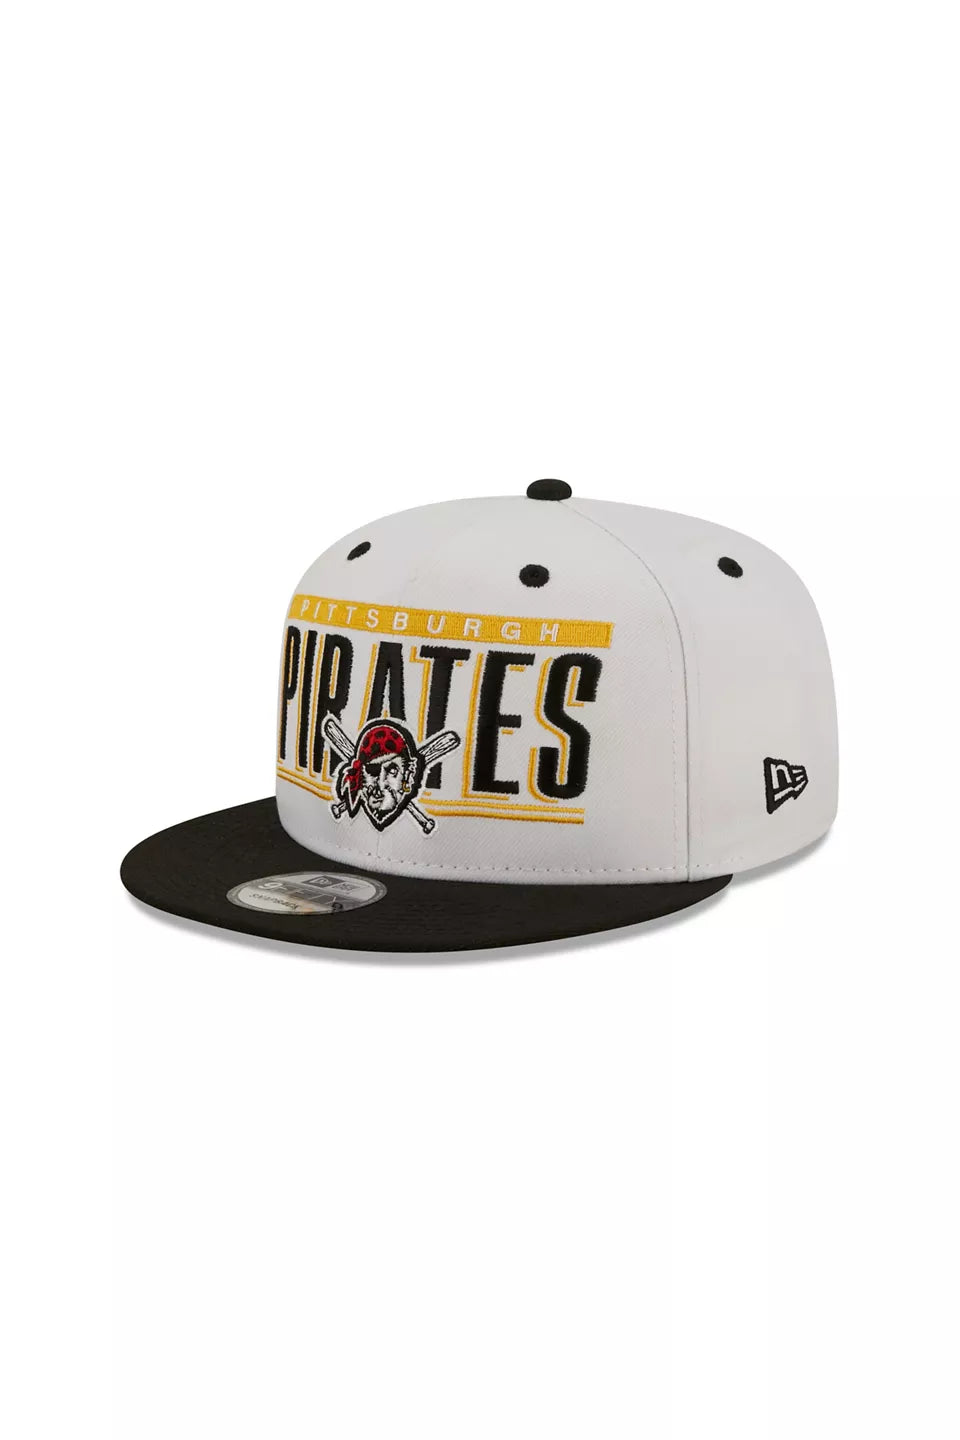 Pittsburgh Pirates New Era Retro Title 9FIFTY Snapback Hat - White/Black/Yellow